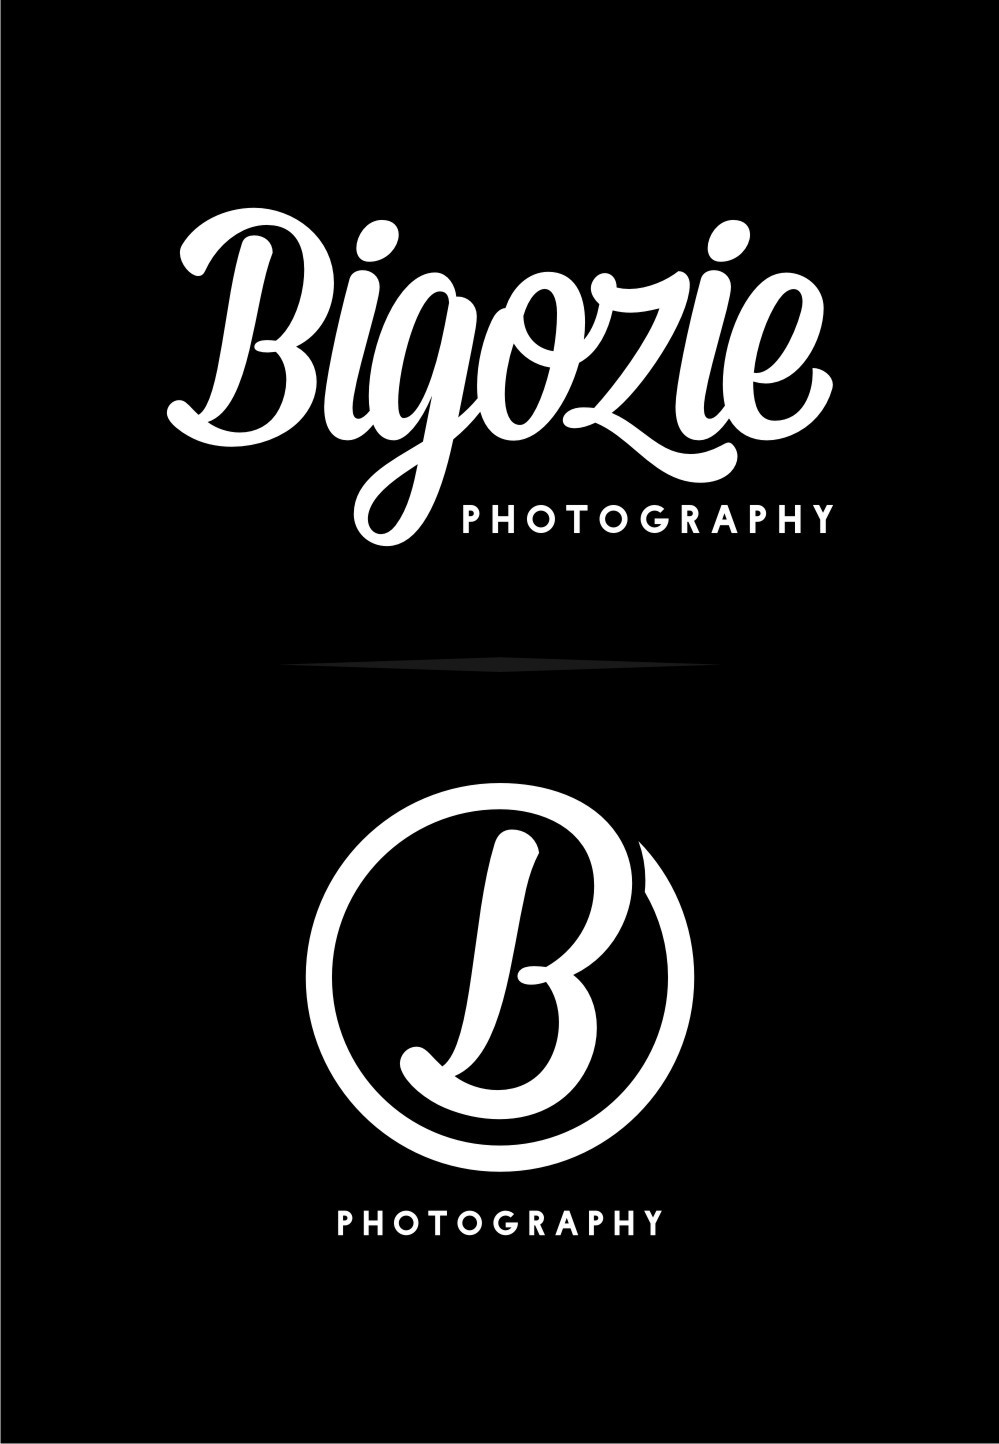 bigozie photography logo Logotype custom font twicolabs